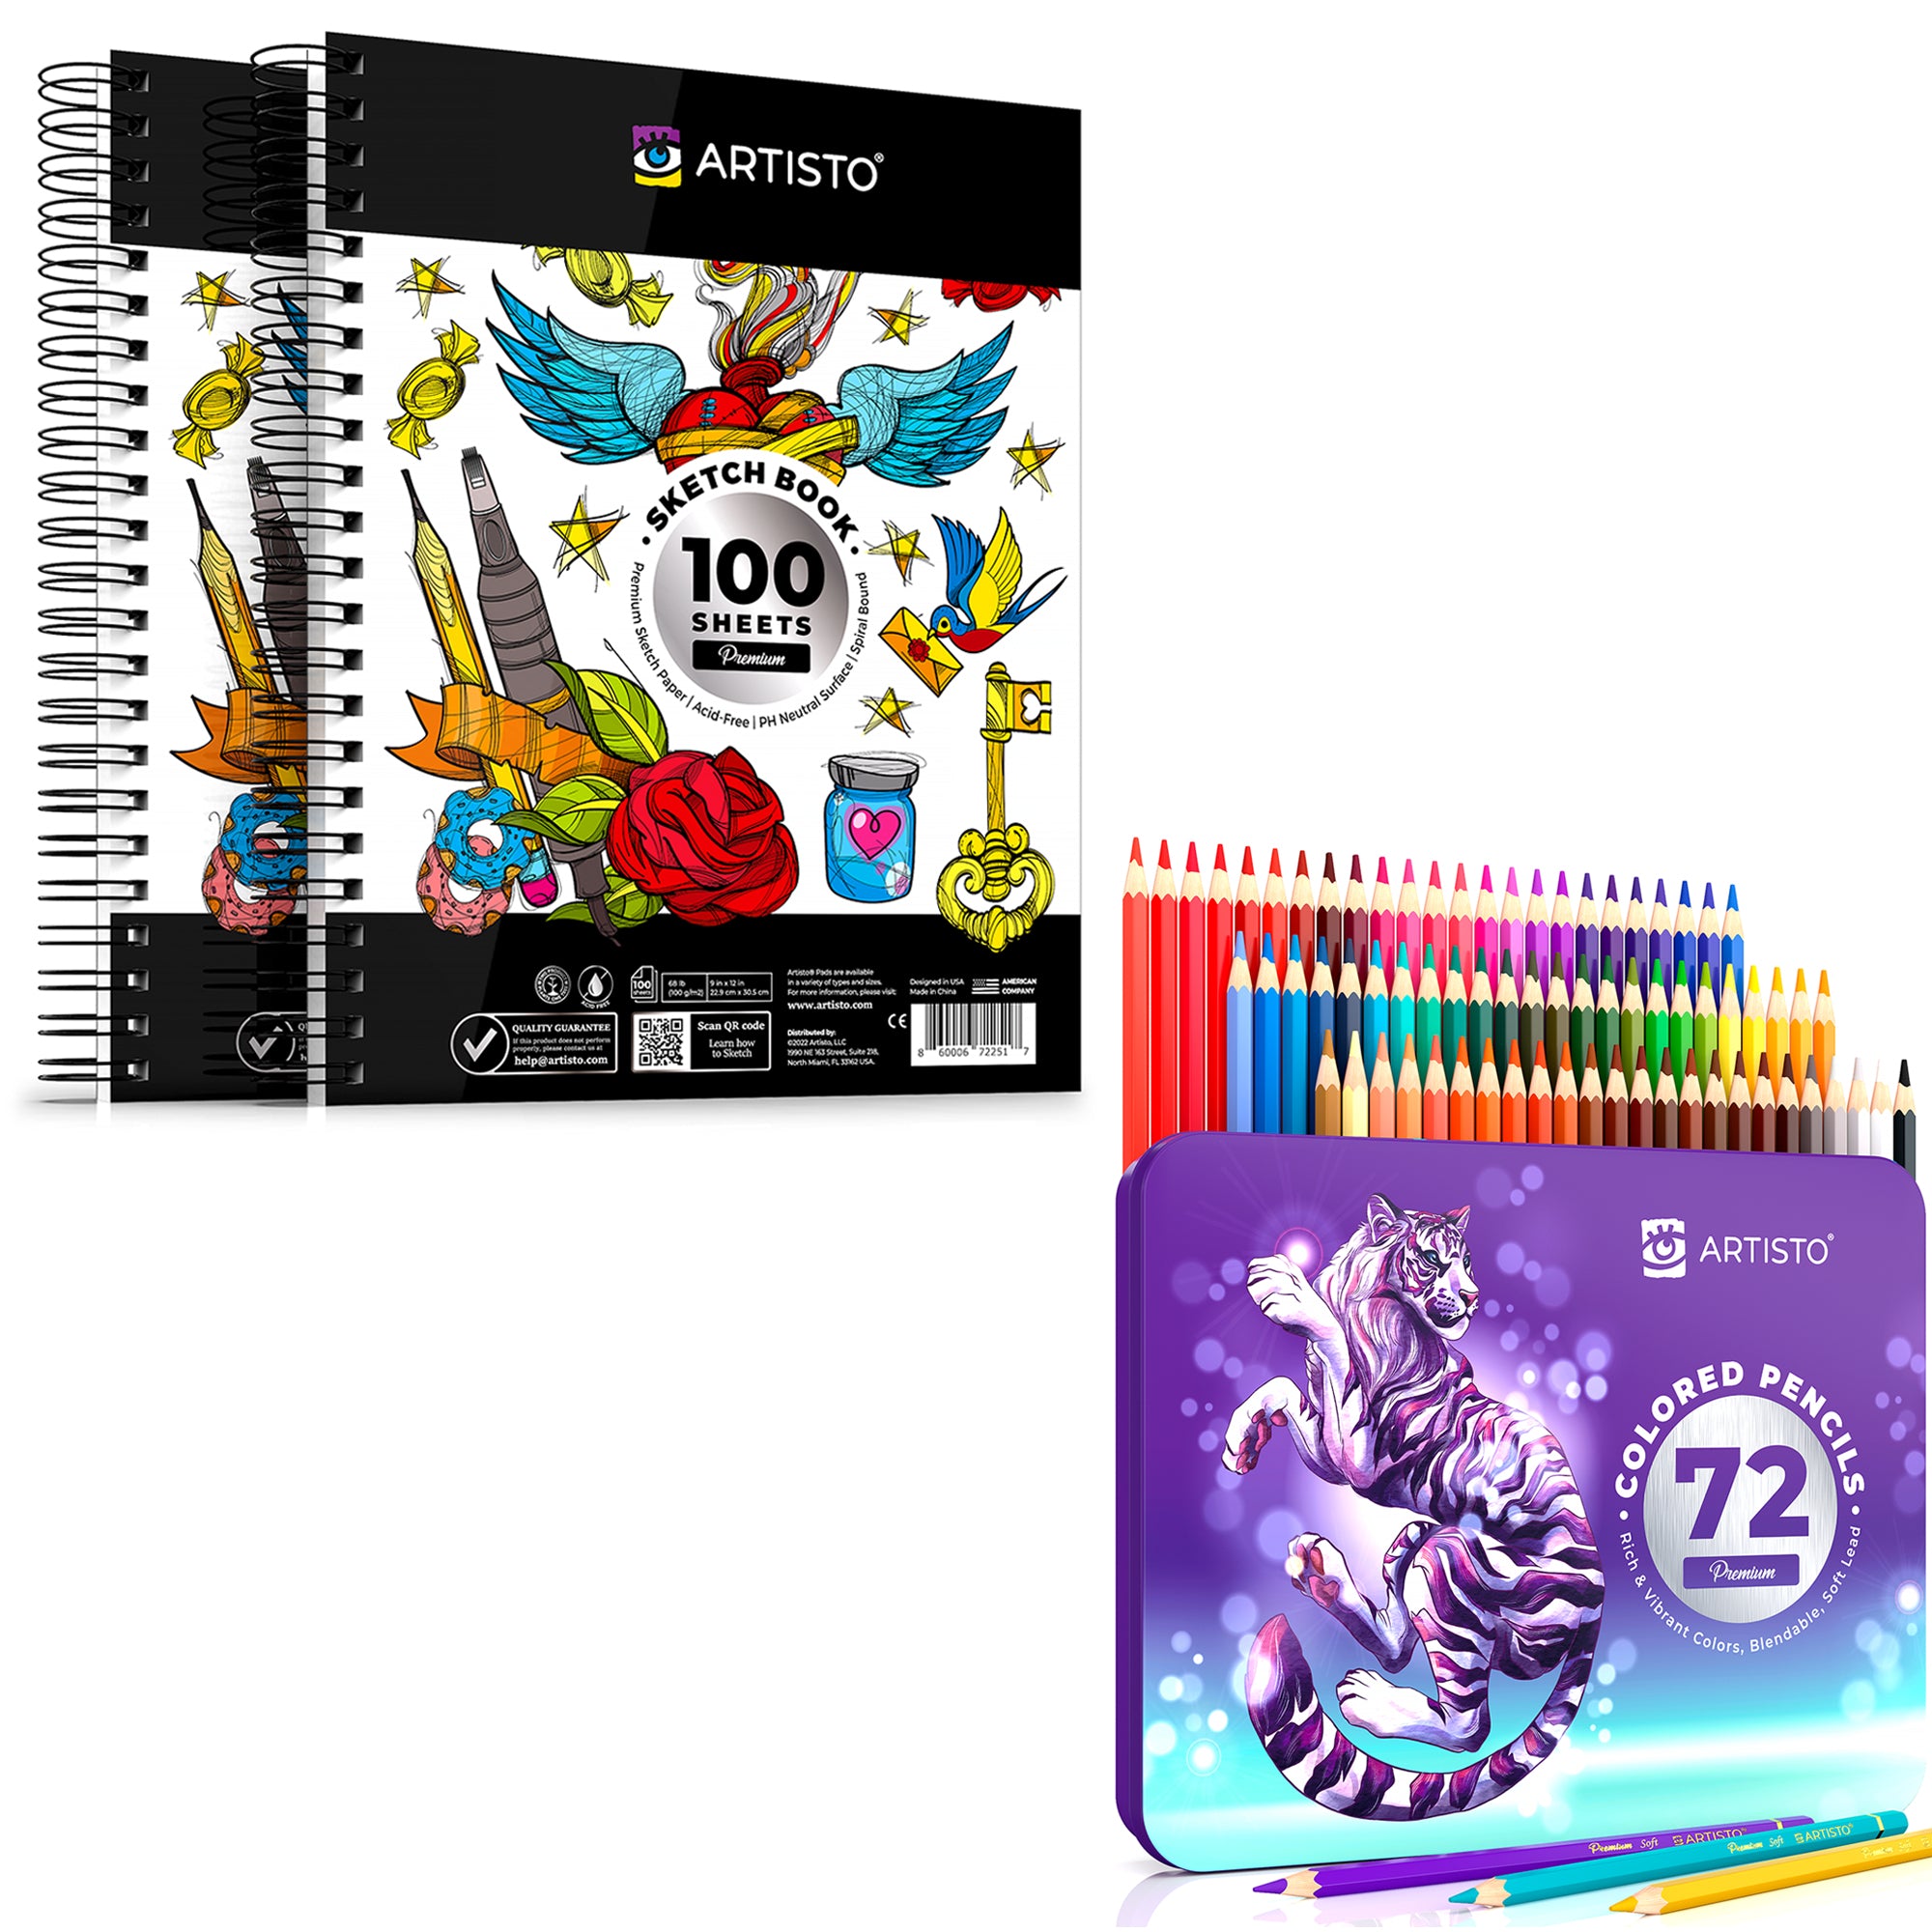 ARTISTO Sketching Pads 9 x 12 & Colored Pencils (72 colors) Bundle